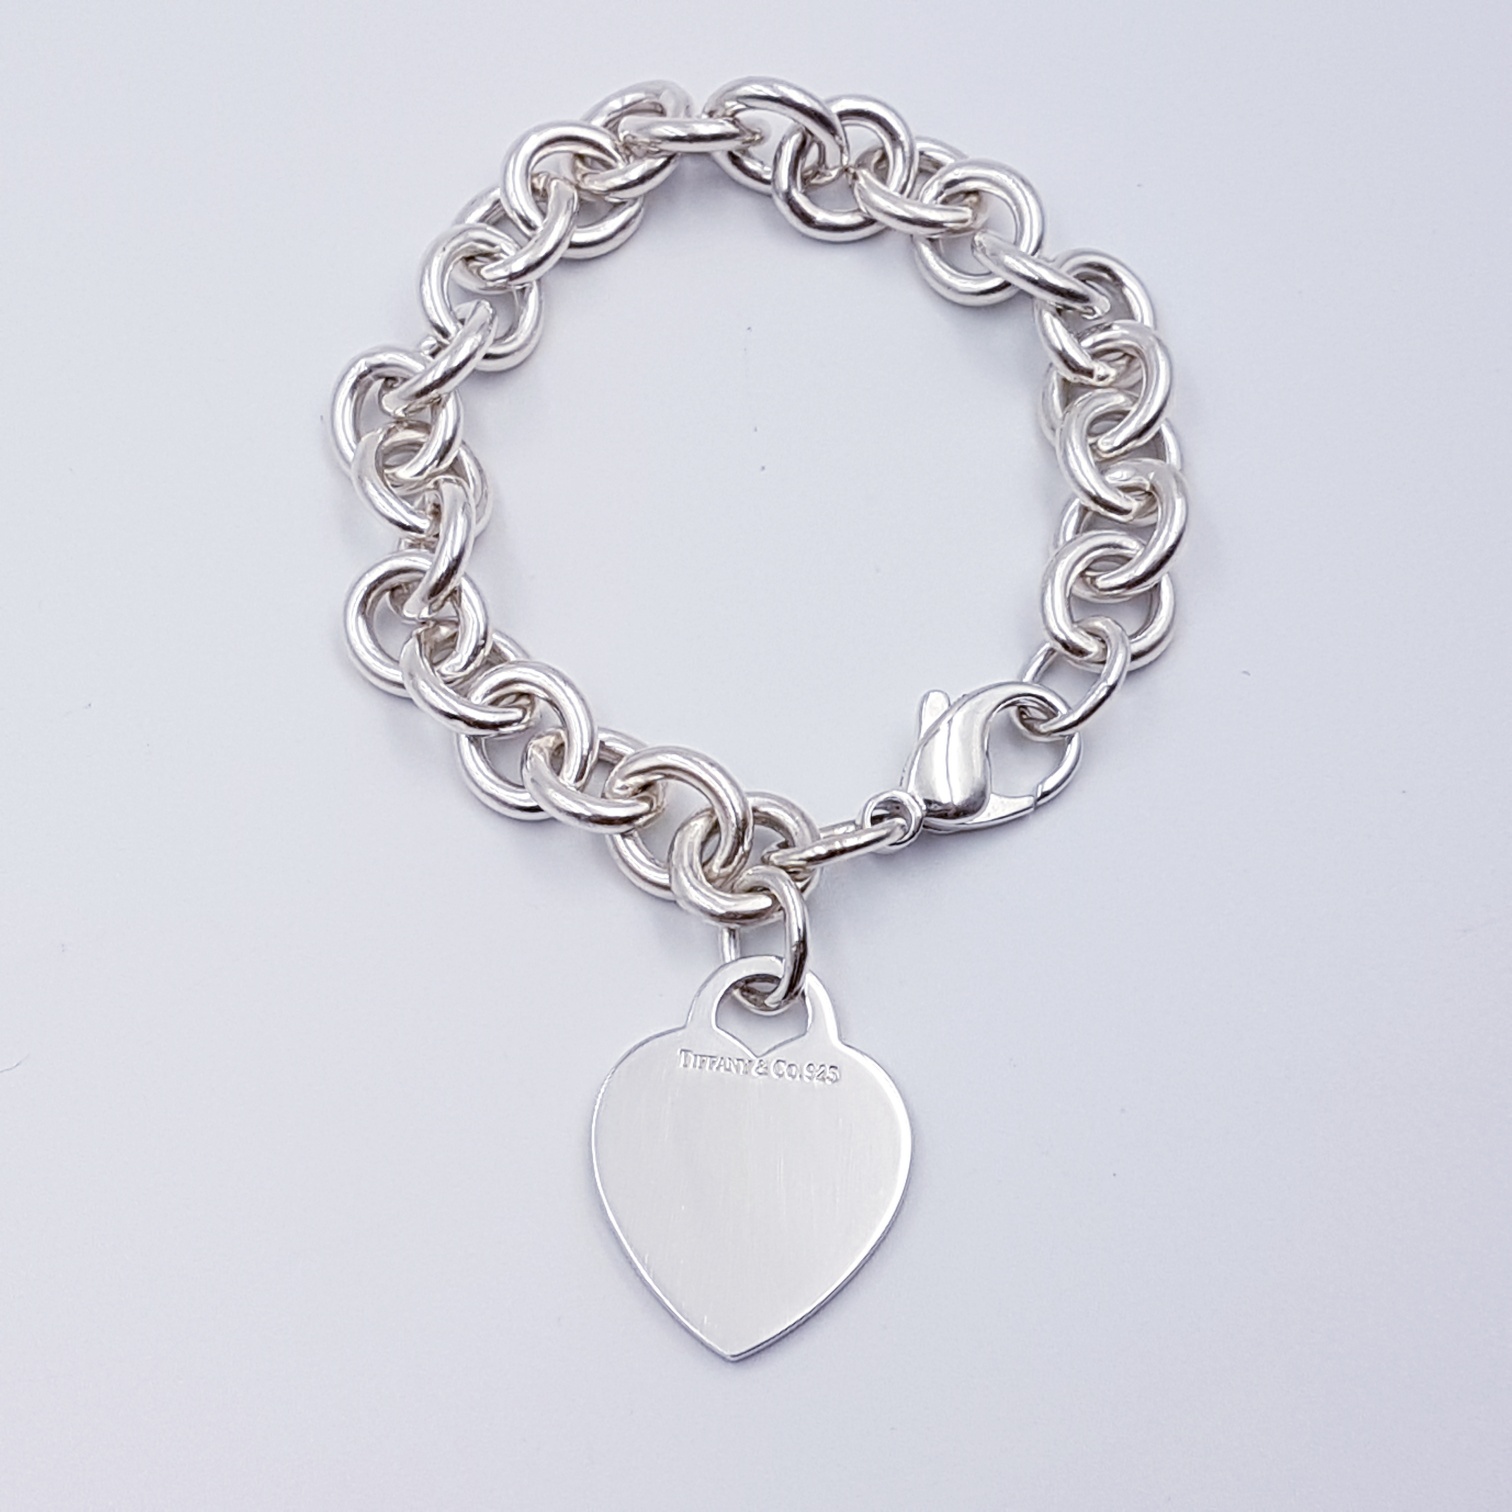 Tiffany & Co. - Engravable Heart Charm Bracelet 7